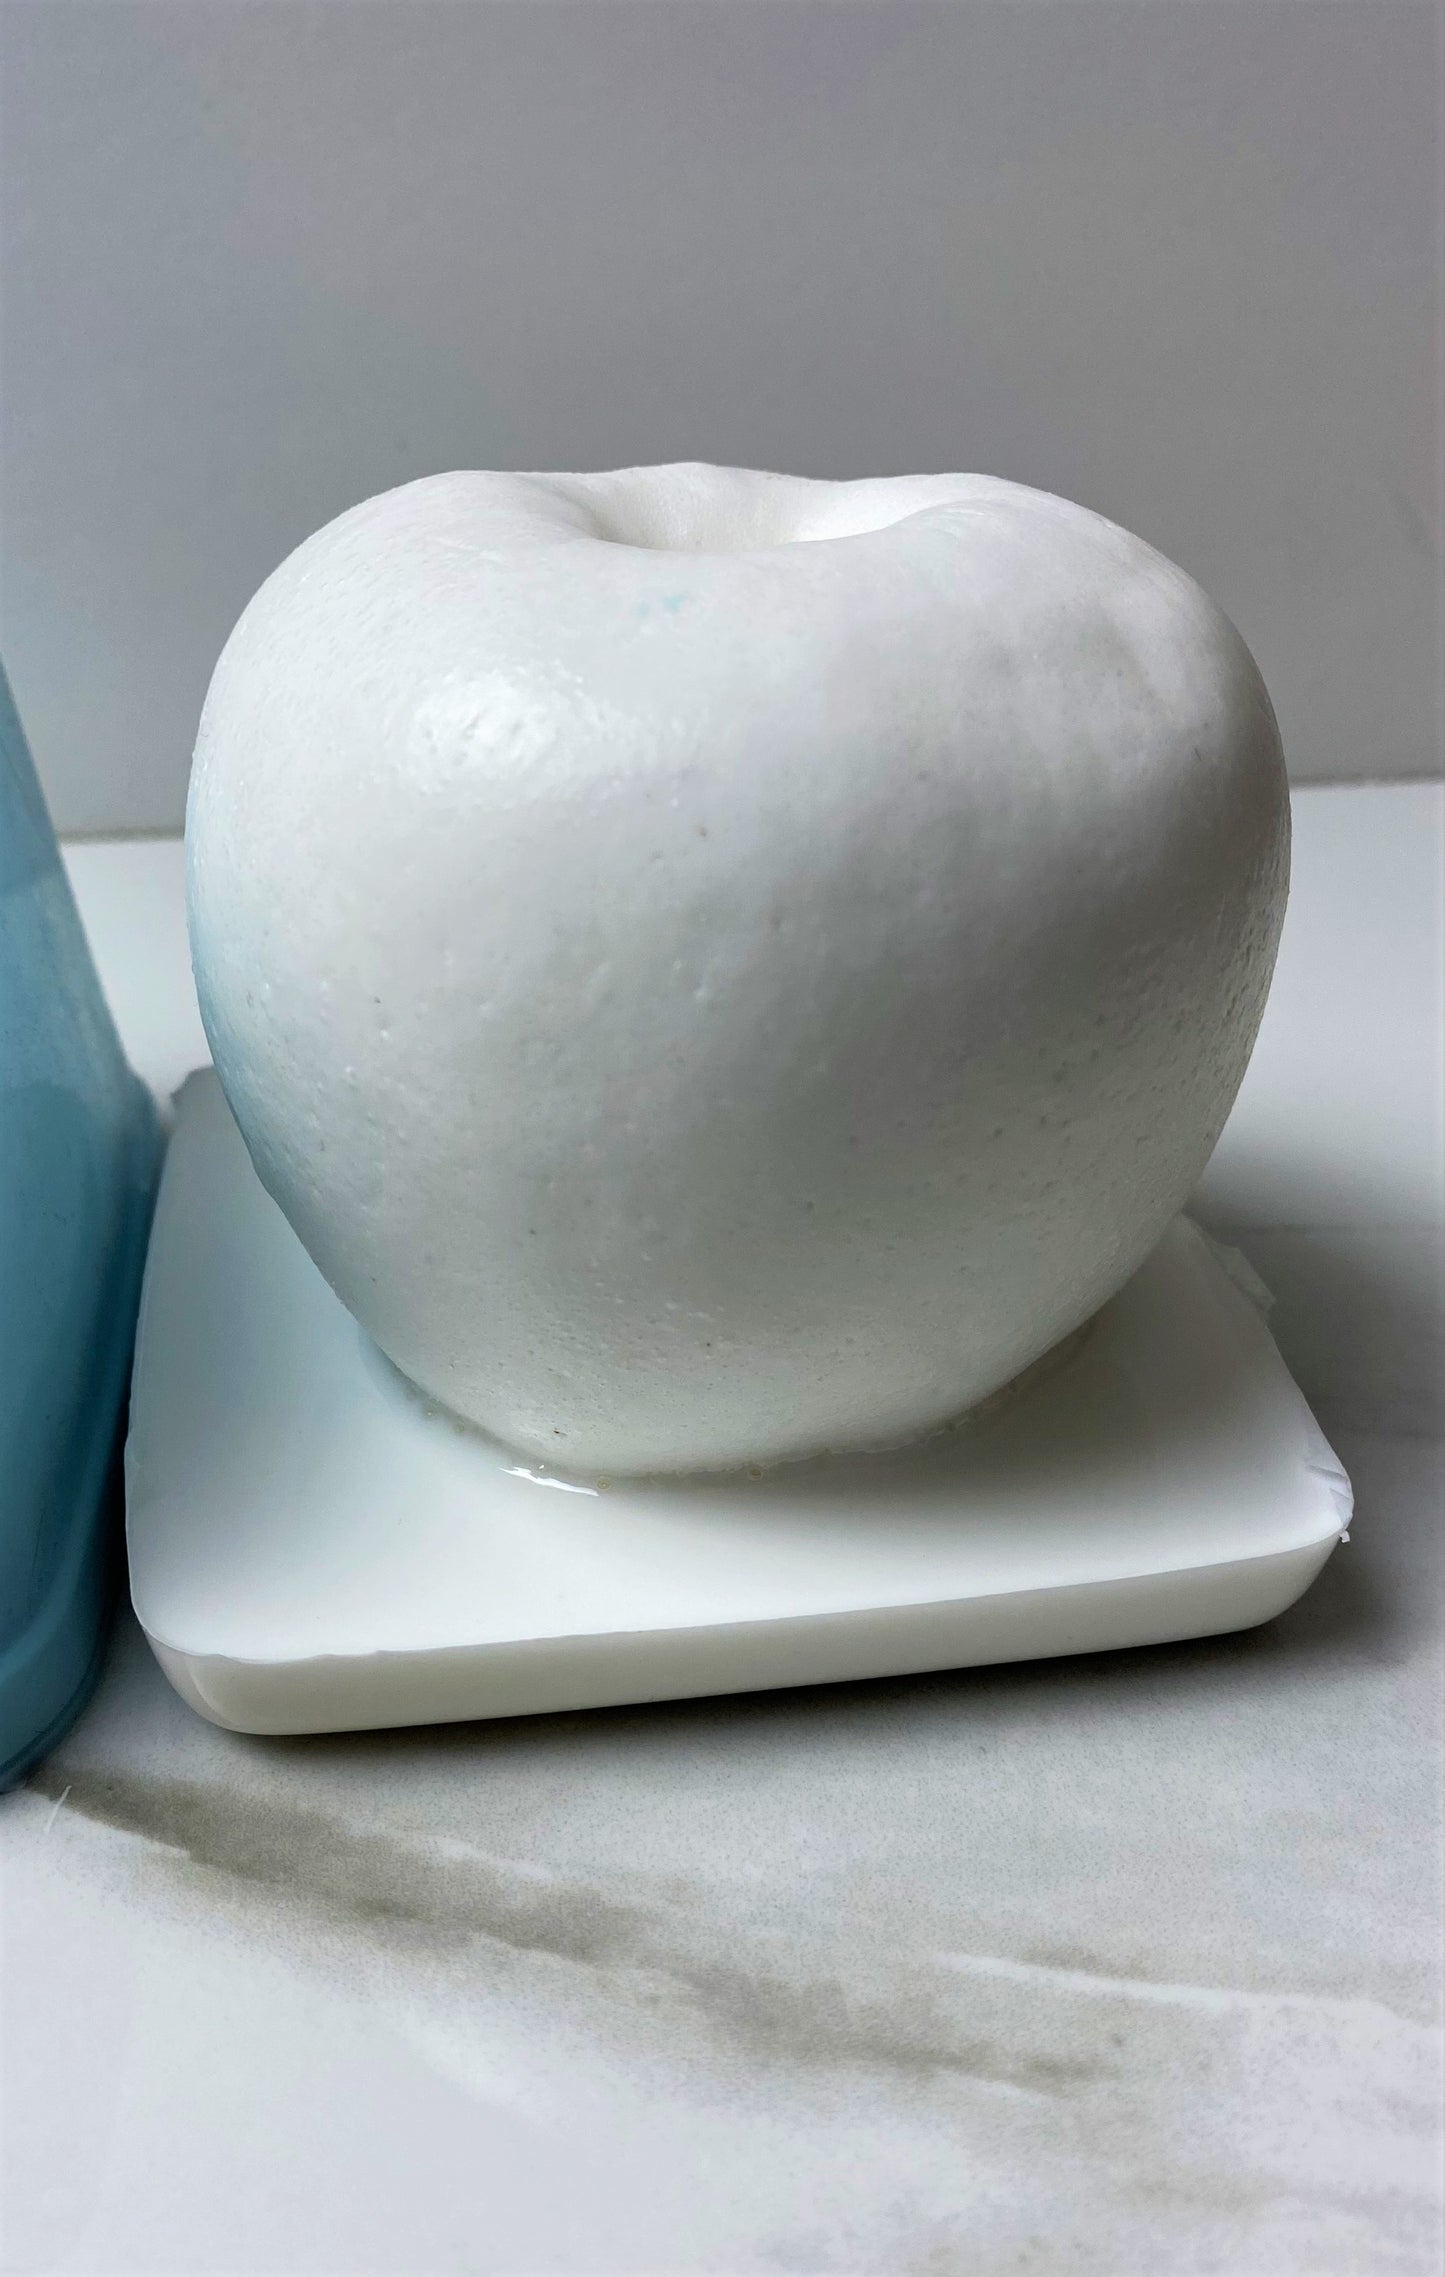 Silicone Mold - 1 Cavity Whole Apple